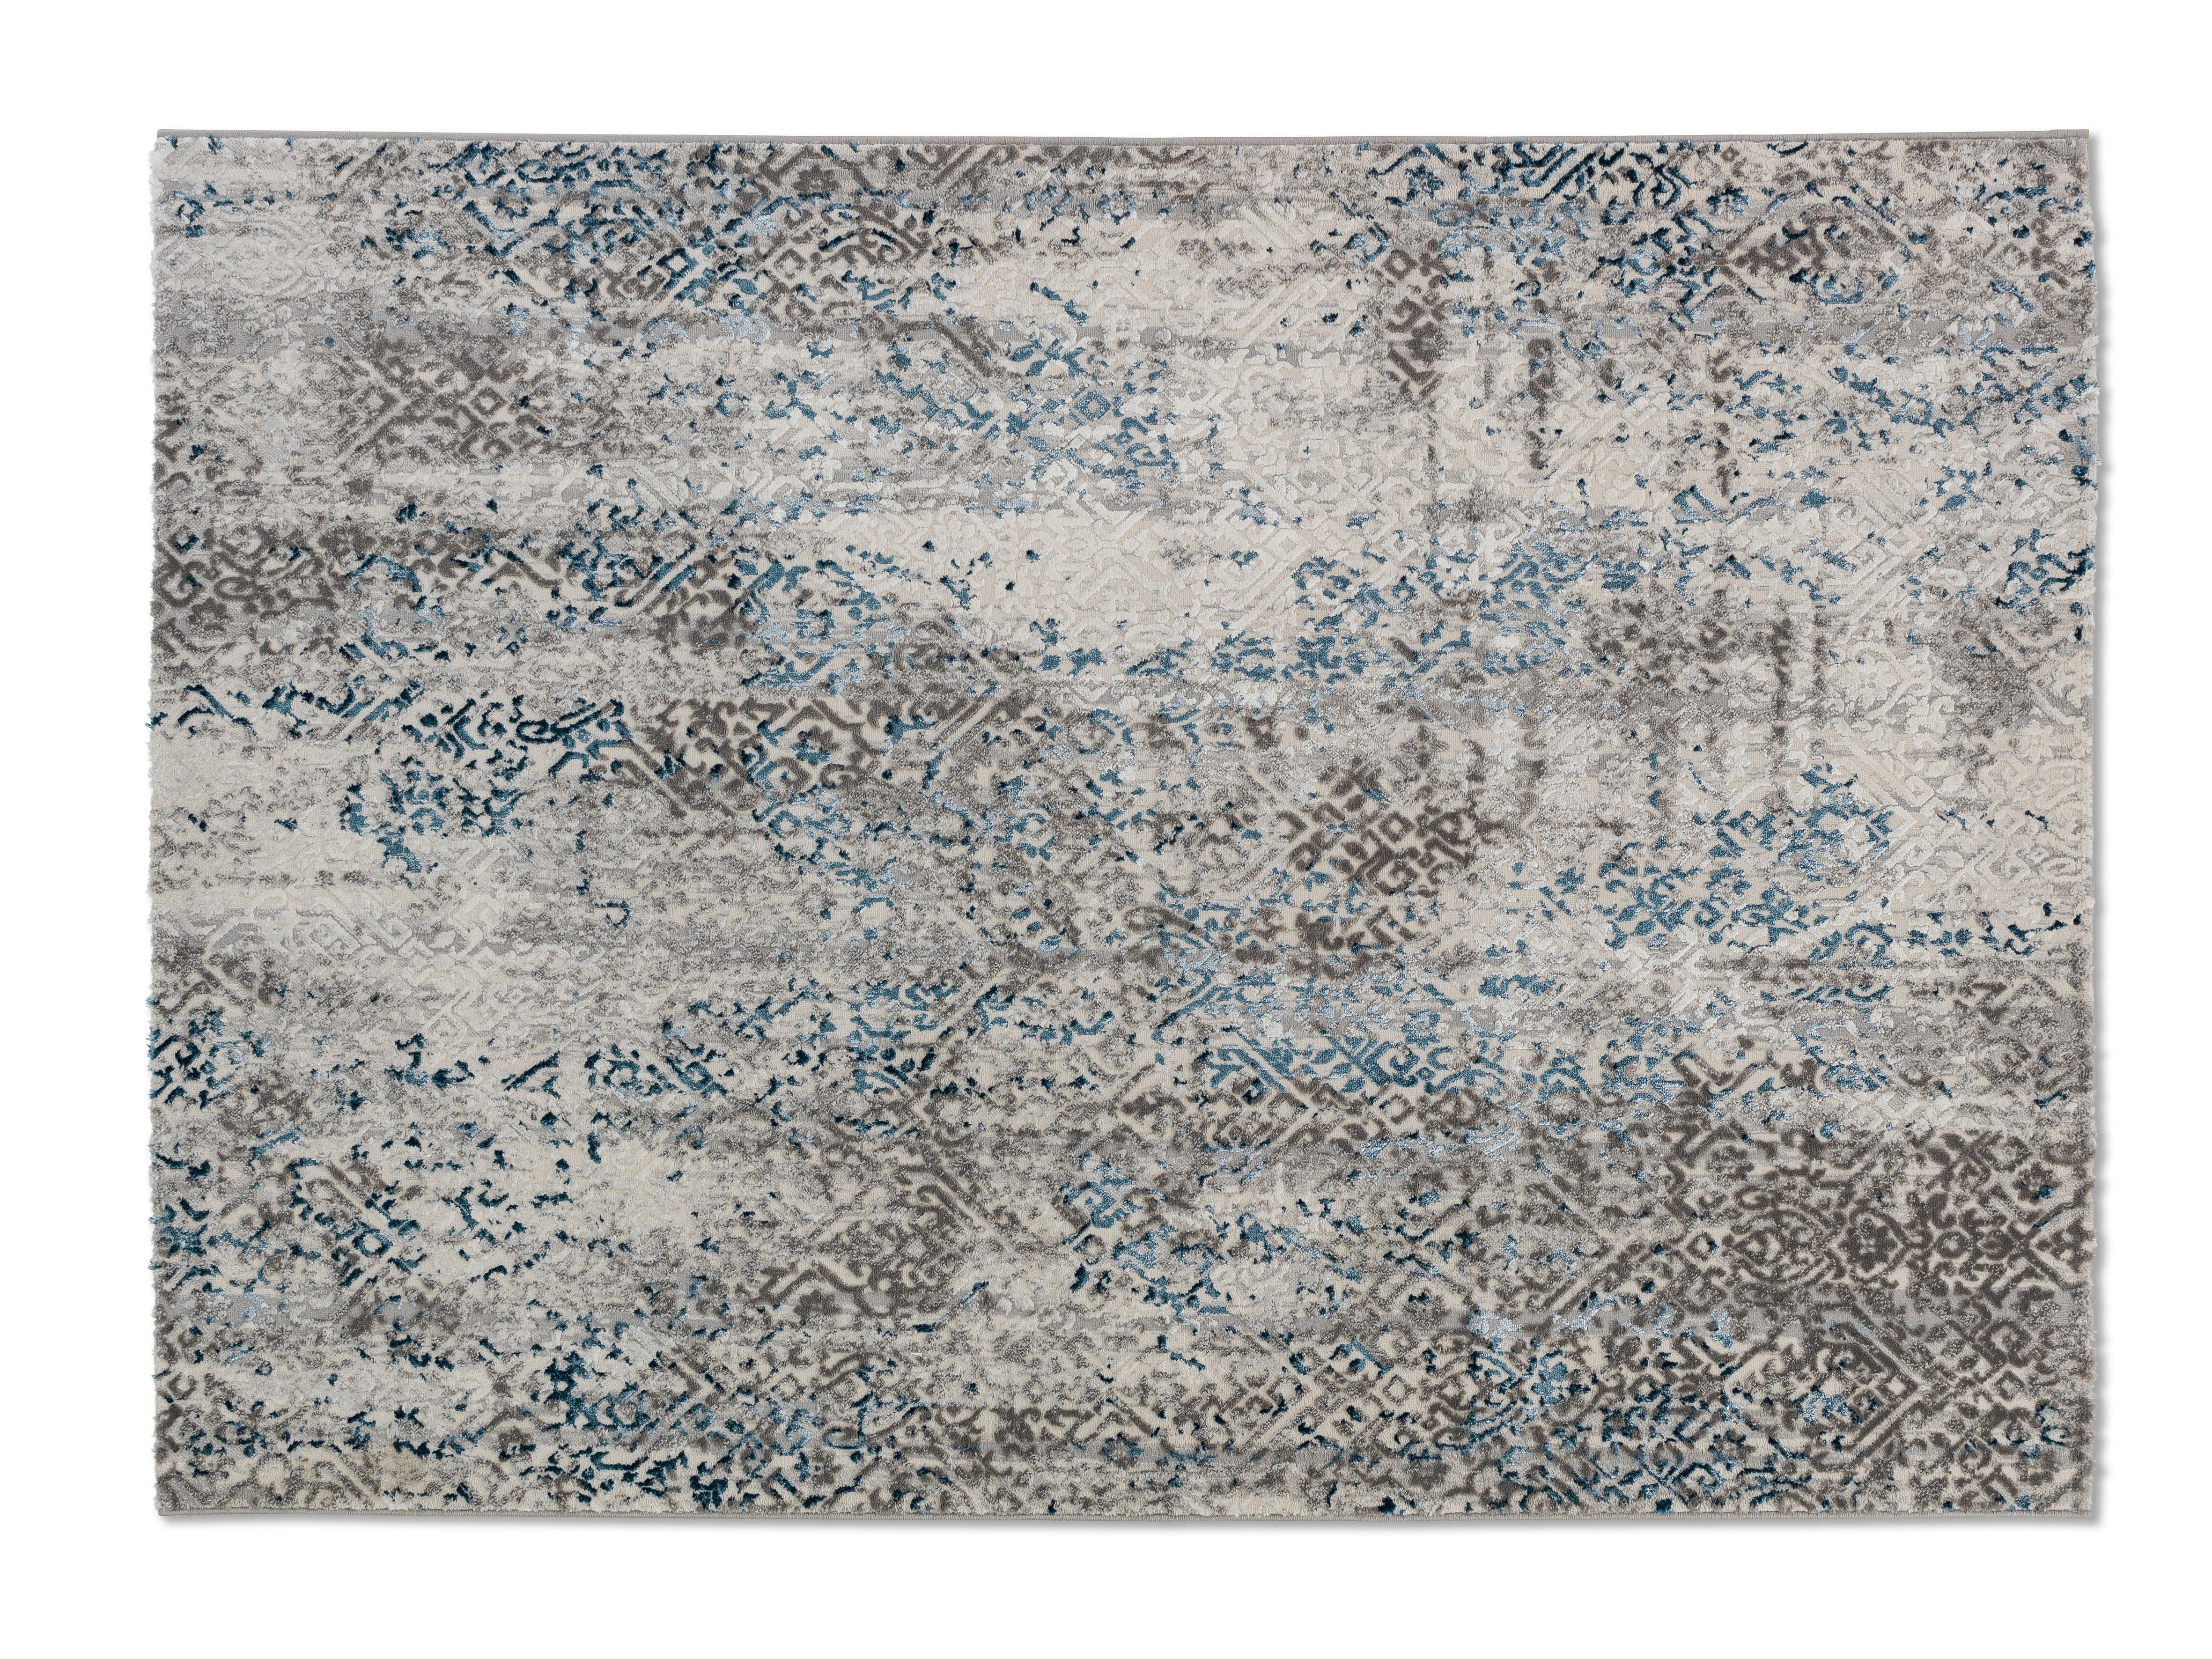 WEBTEPPICH  160/230 cm  Blau, Beige   - Blau/Beige, Design, Textil (160/230cm) - Novel